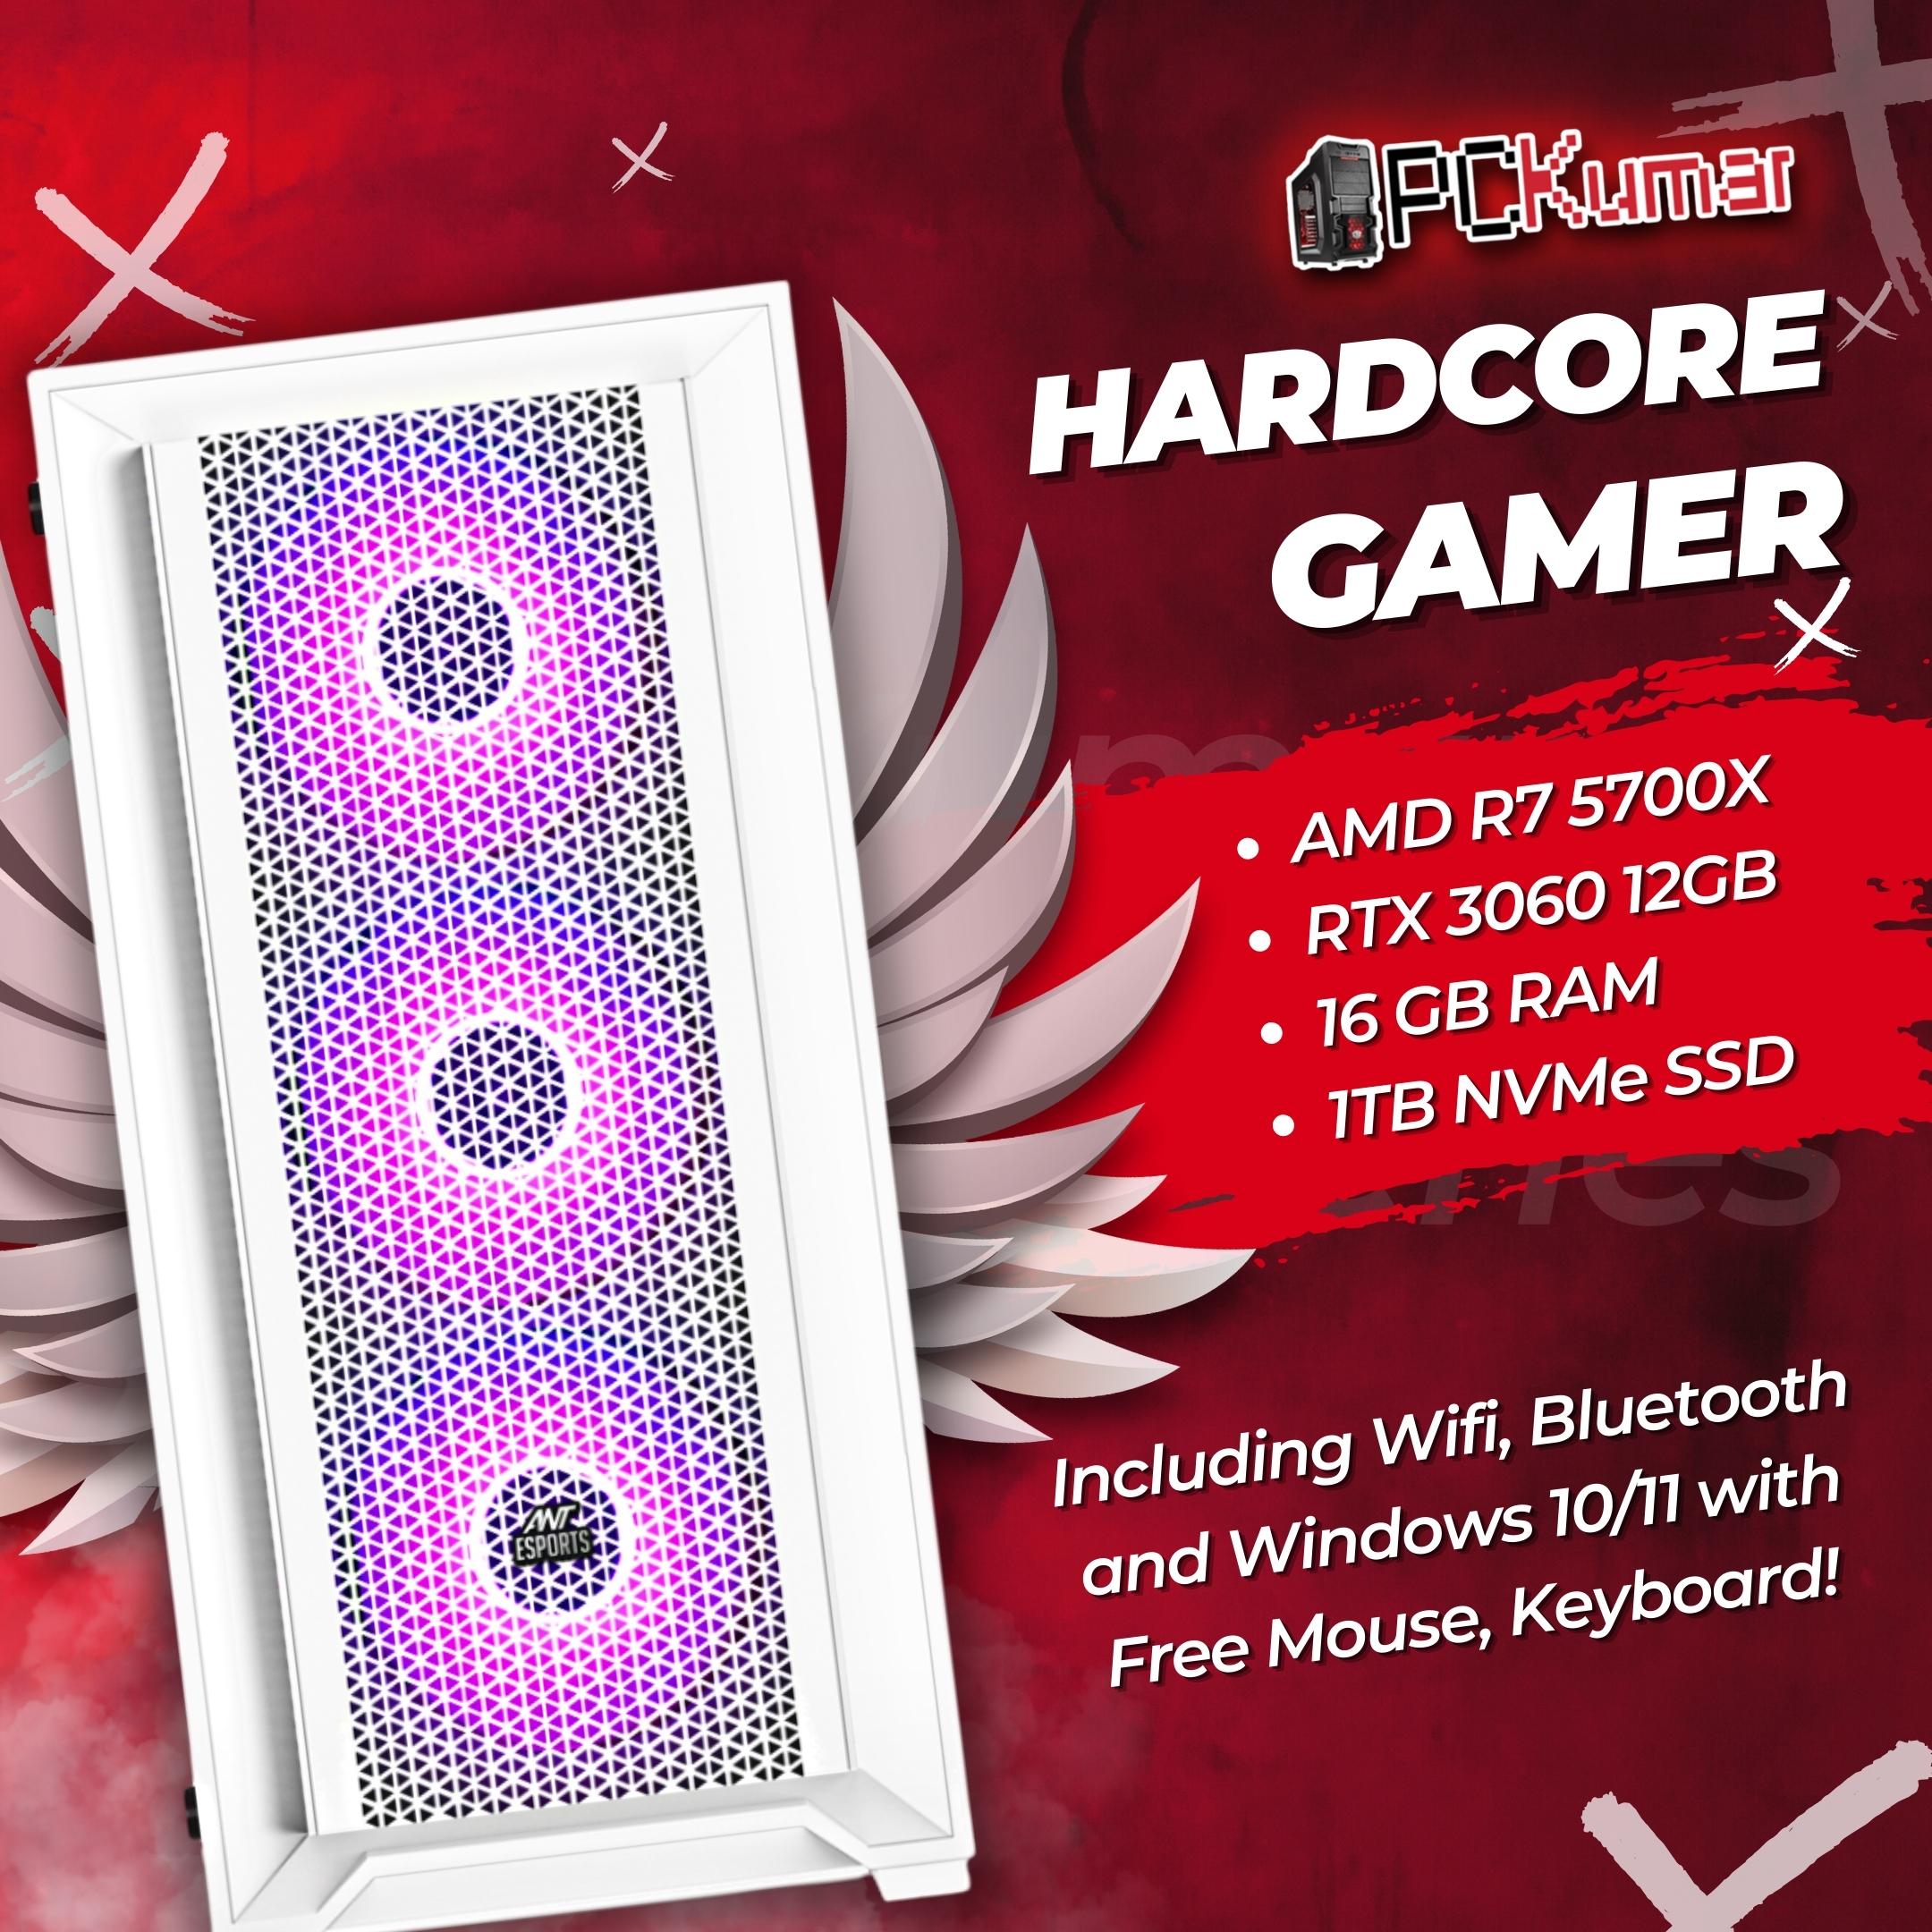 Hardcore Gamer with AMD Ryzen 7 5700X + RTX 3060